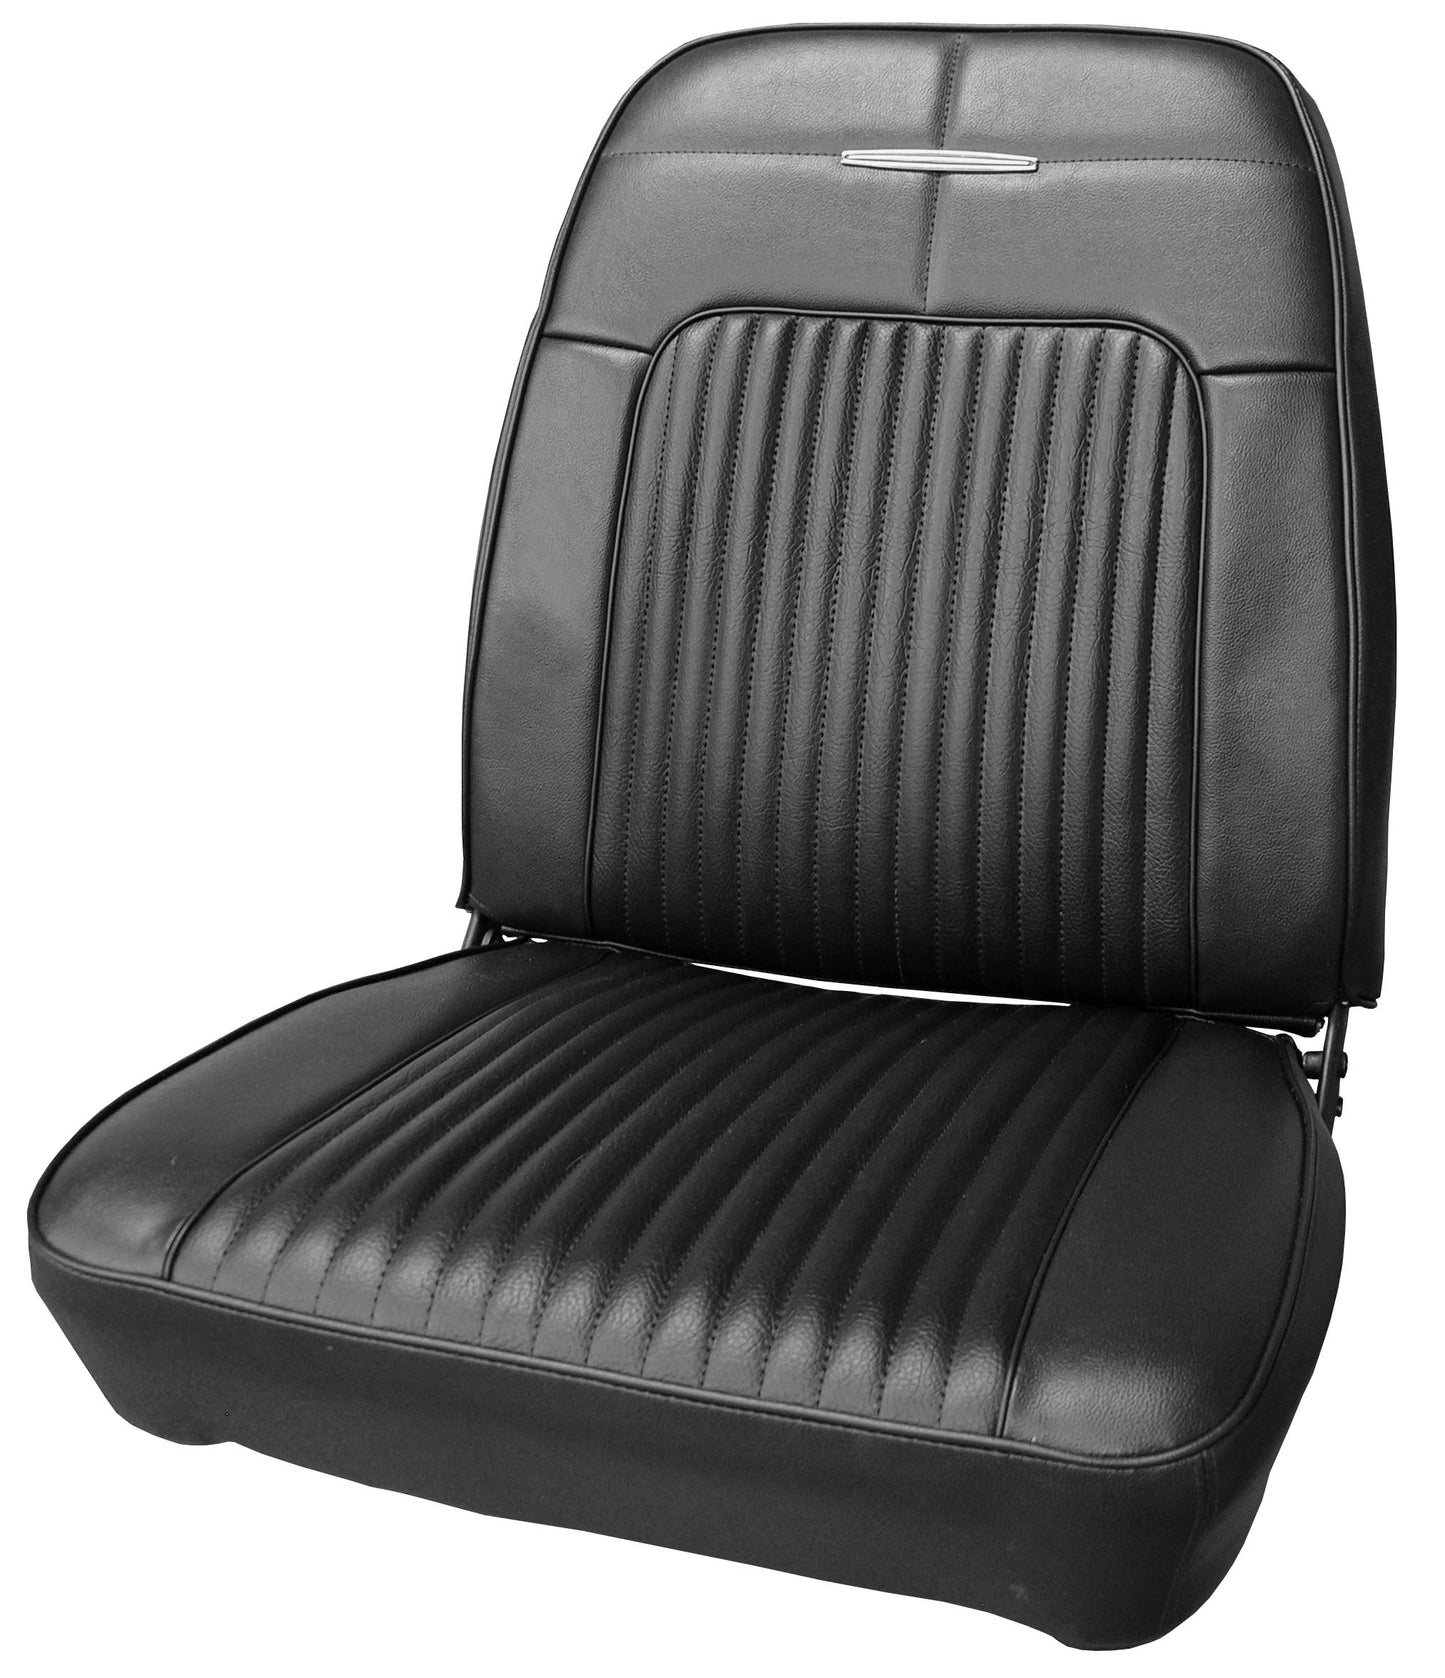 69 CORONET FRONT BUCKET SEAT UPHOLSTERY - BLACK